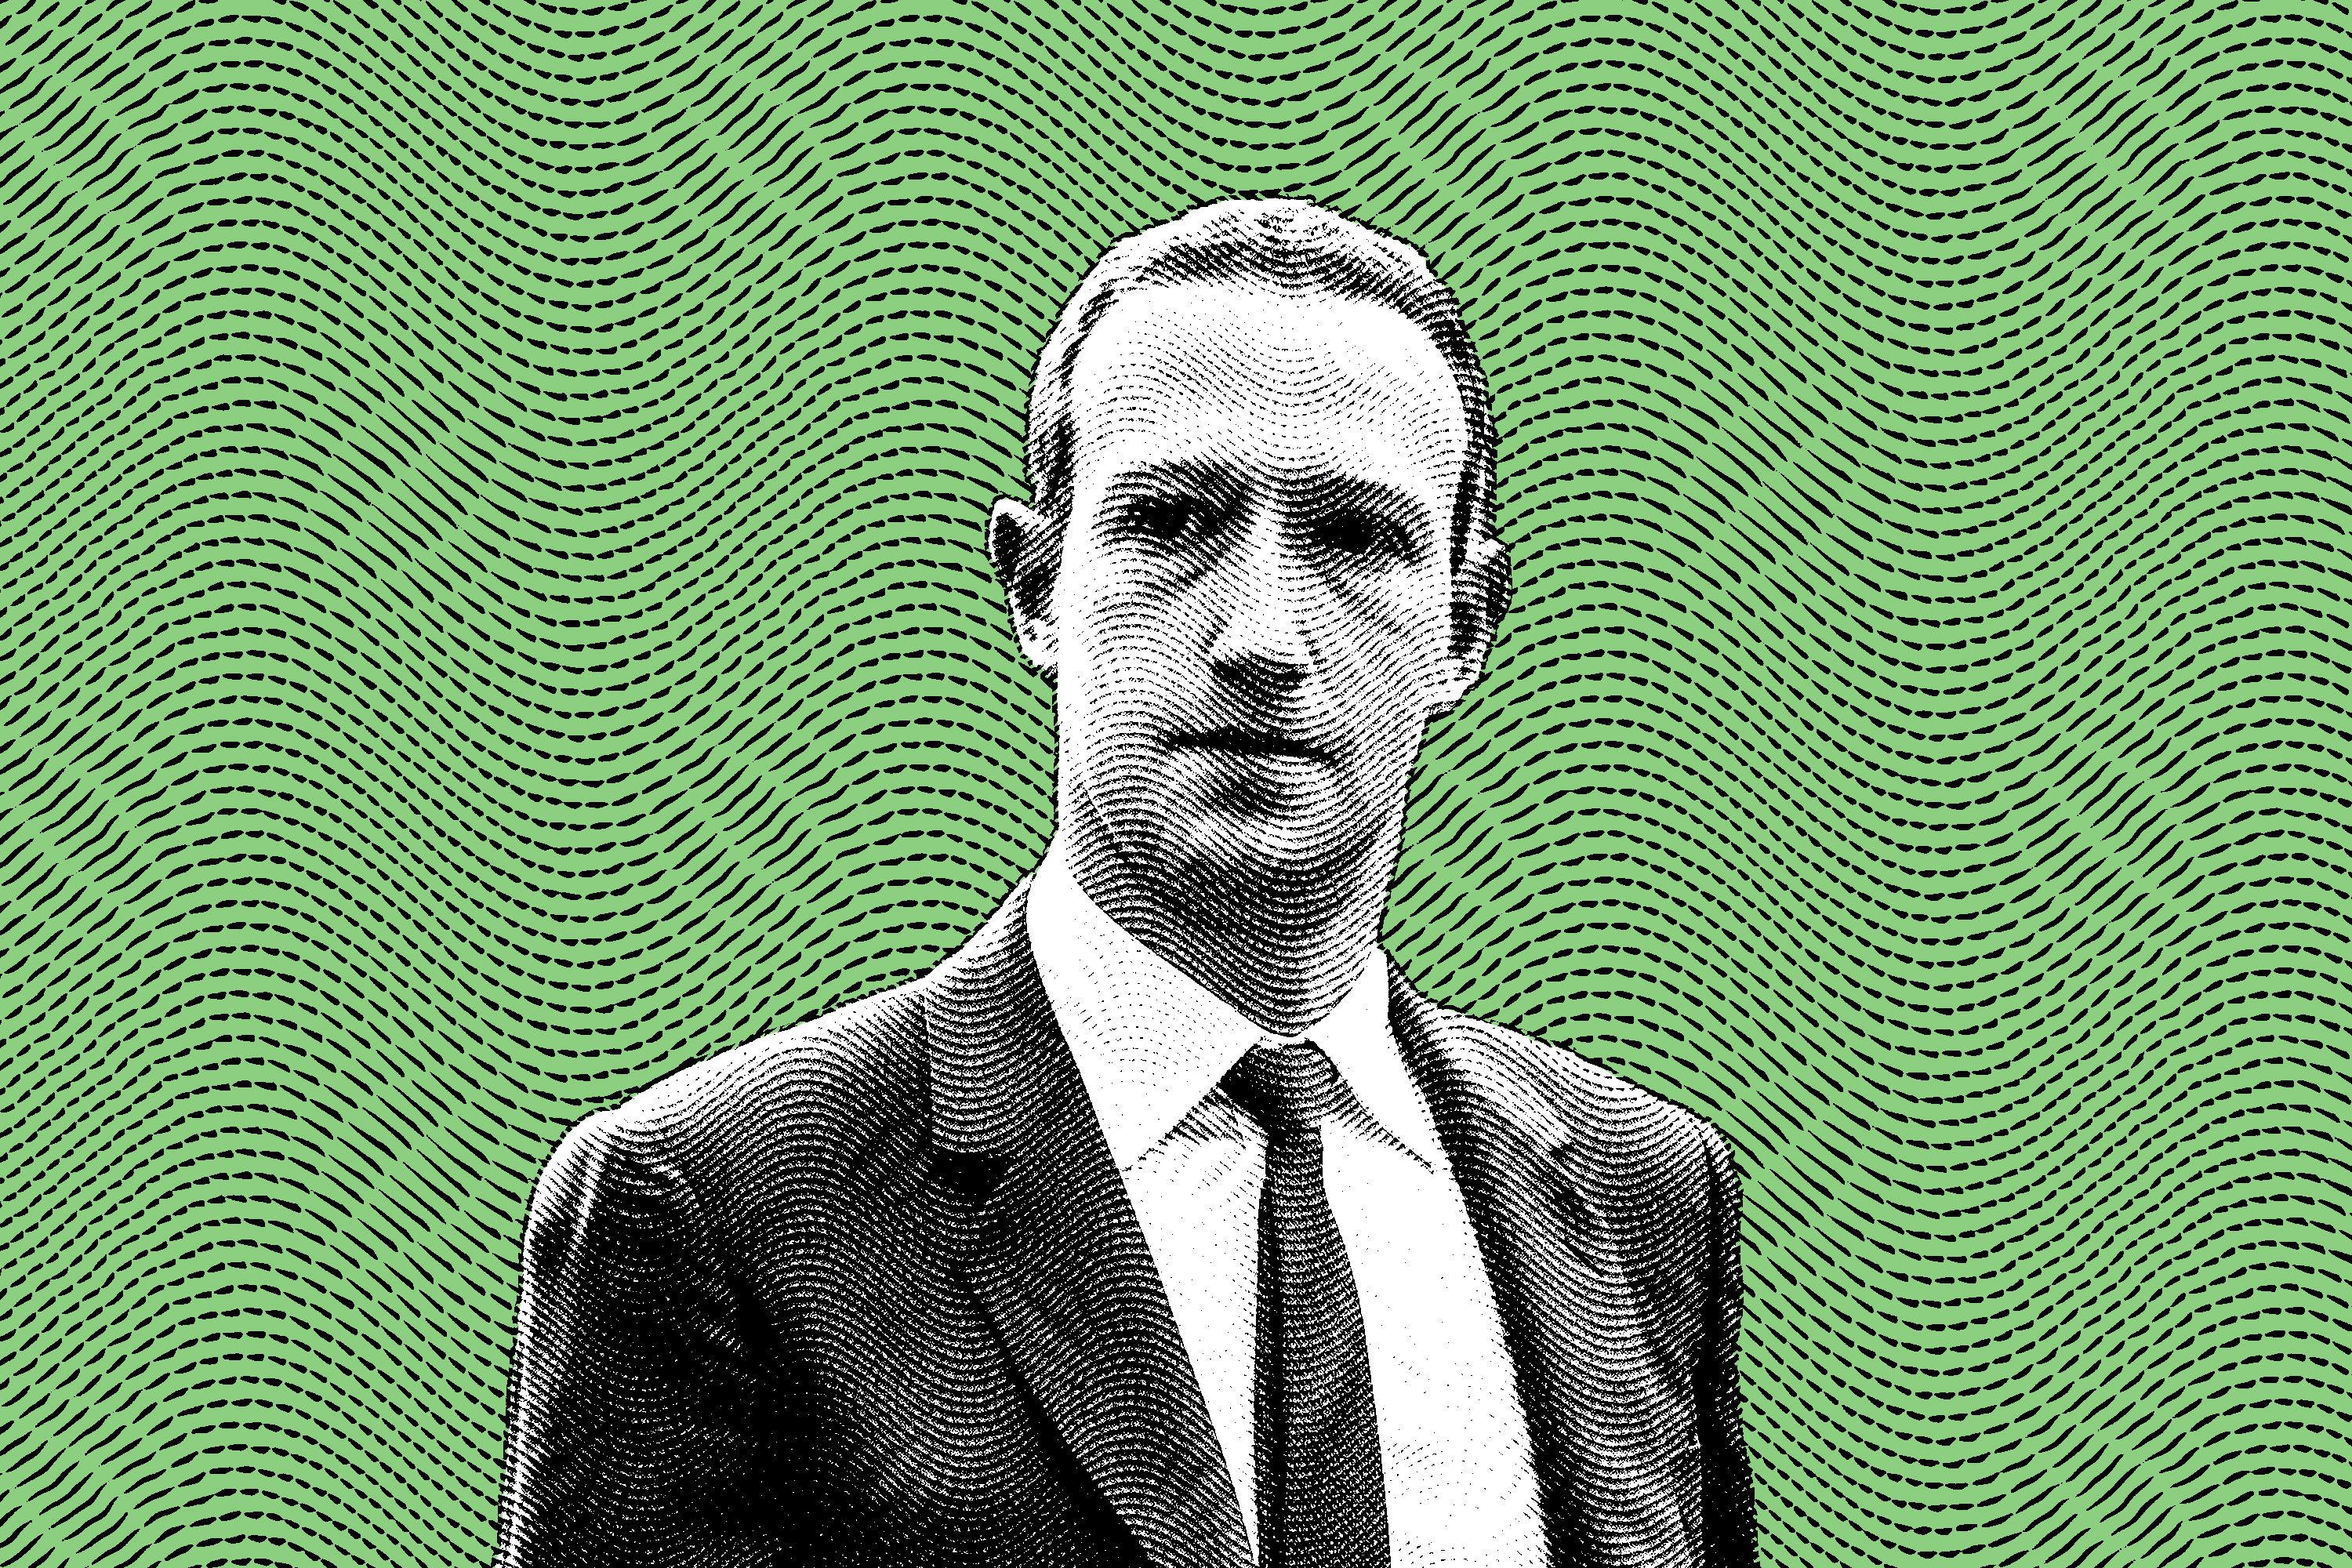 Mark Zuckerberg Thinks Your Job Will Get More Creative in Coming Years